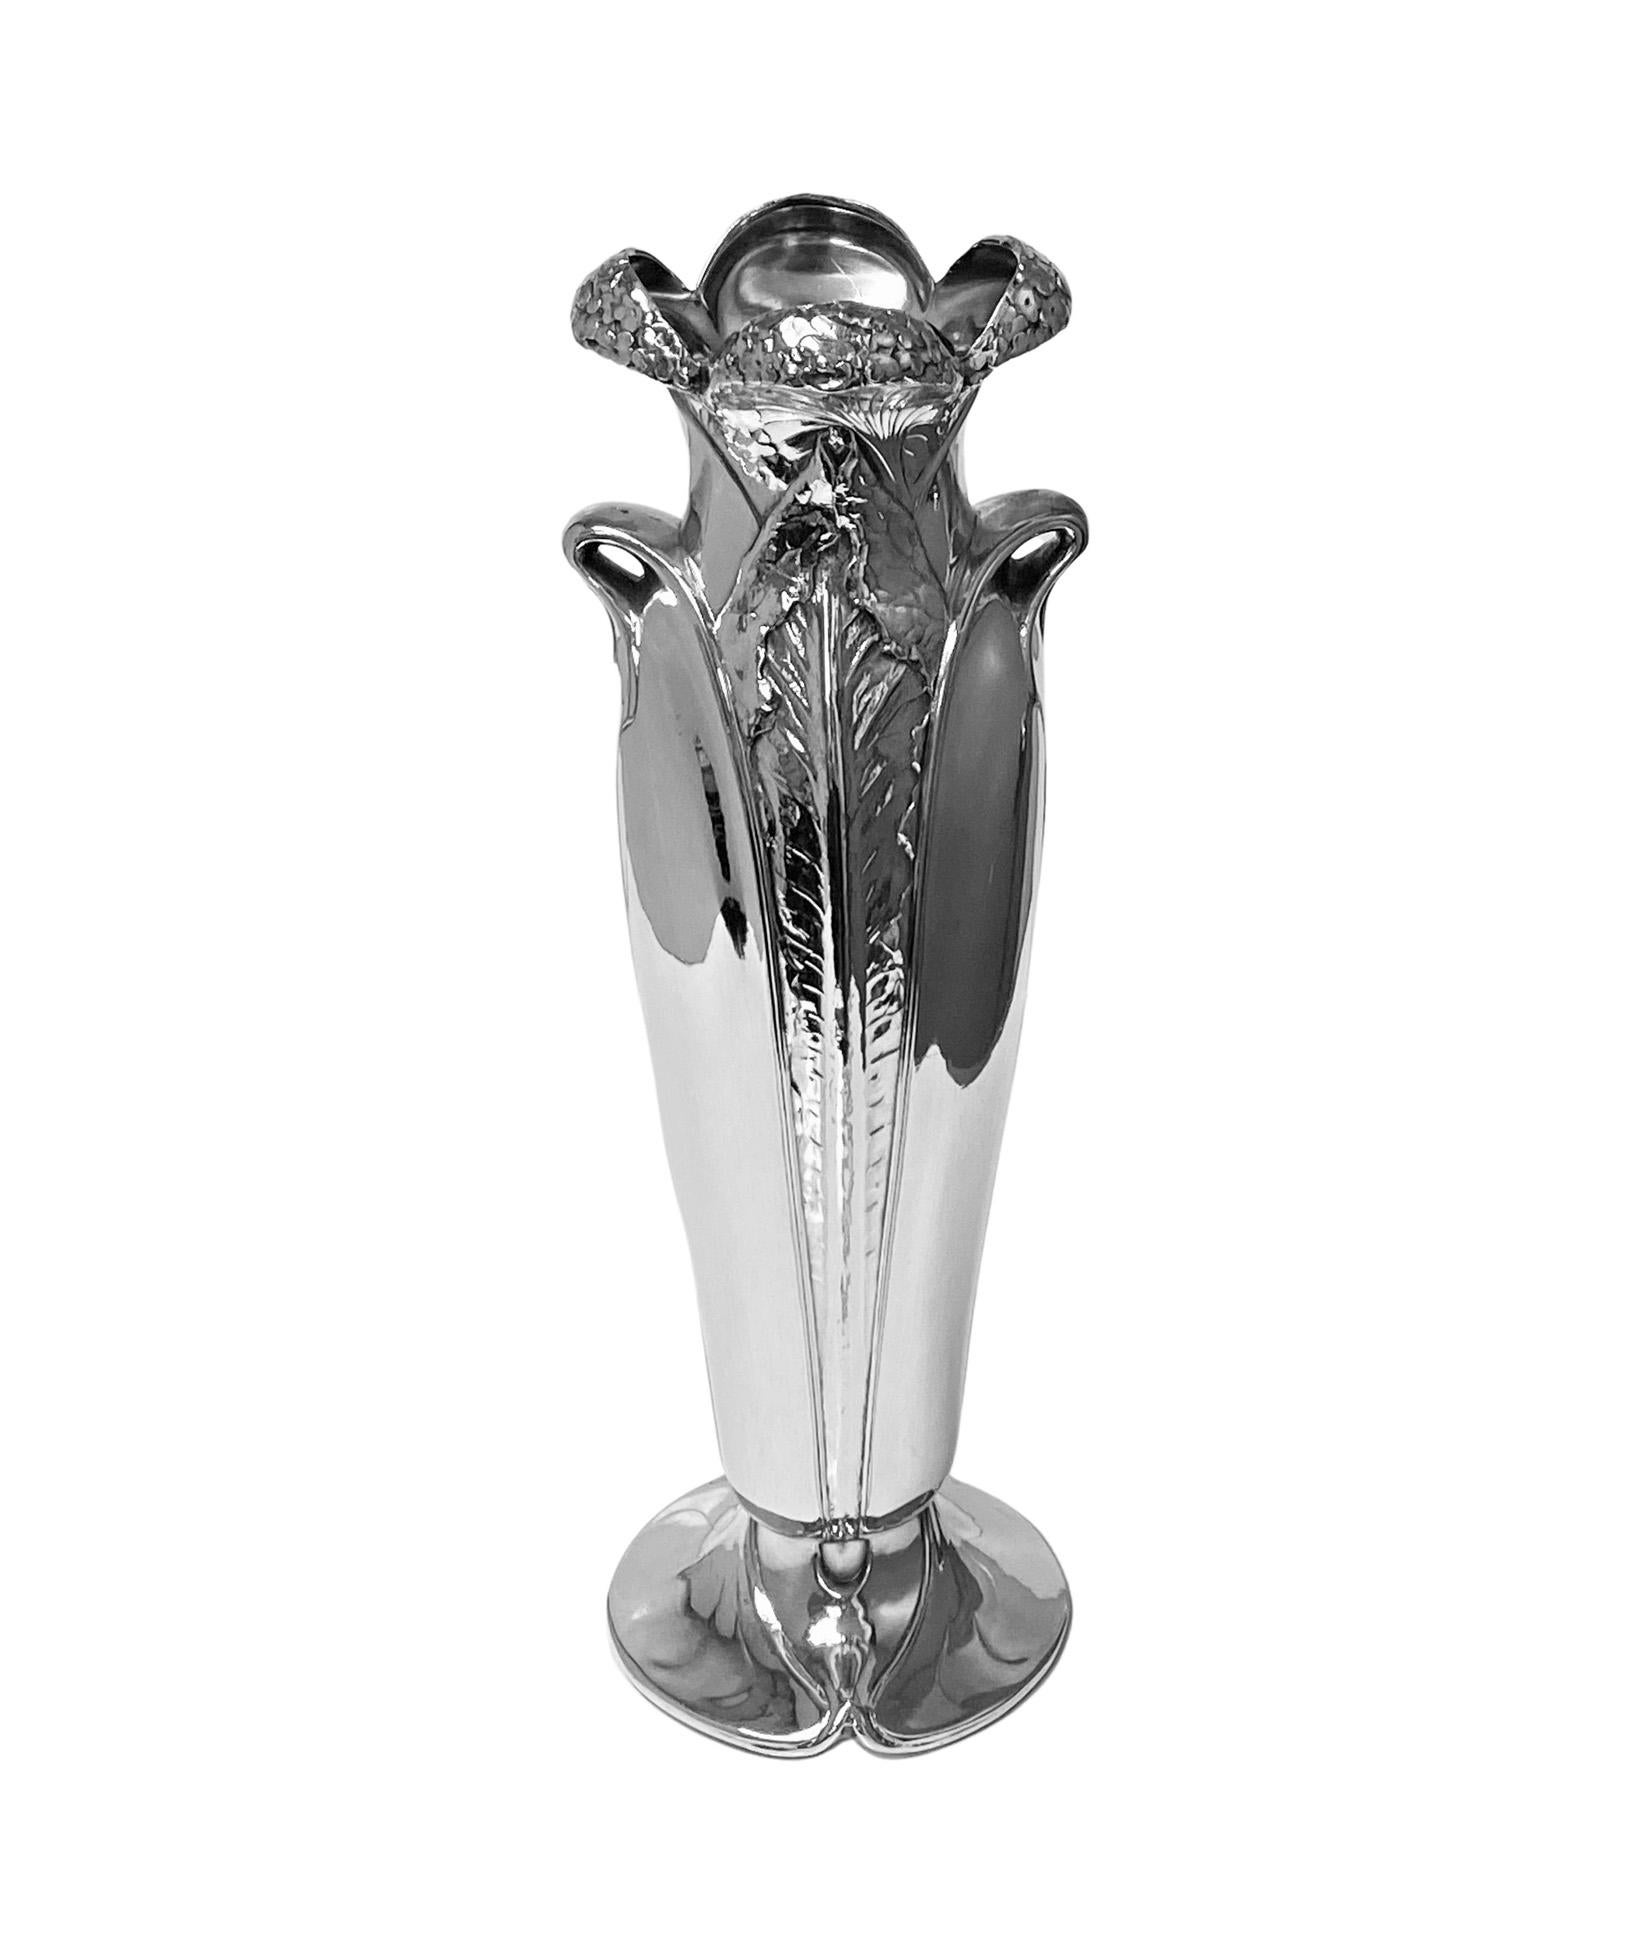 Christofle Large Antique Christofle Vase French Art Nouveau Silver Plated Rubans Flowers 